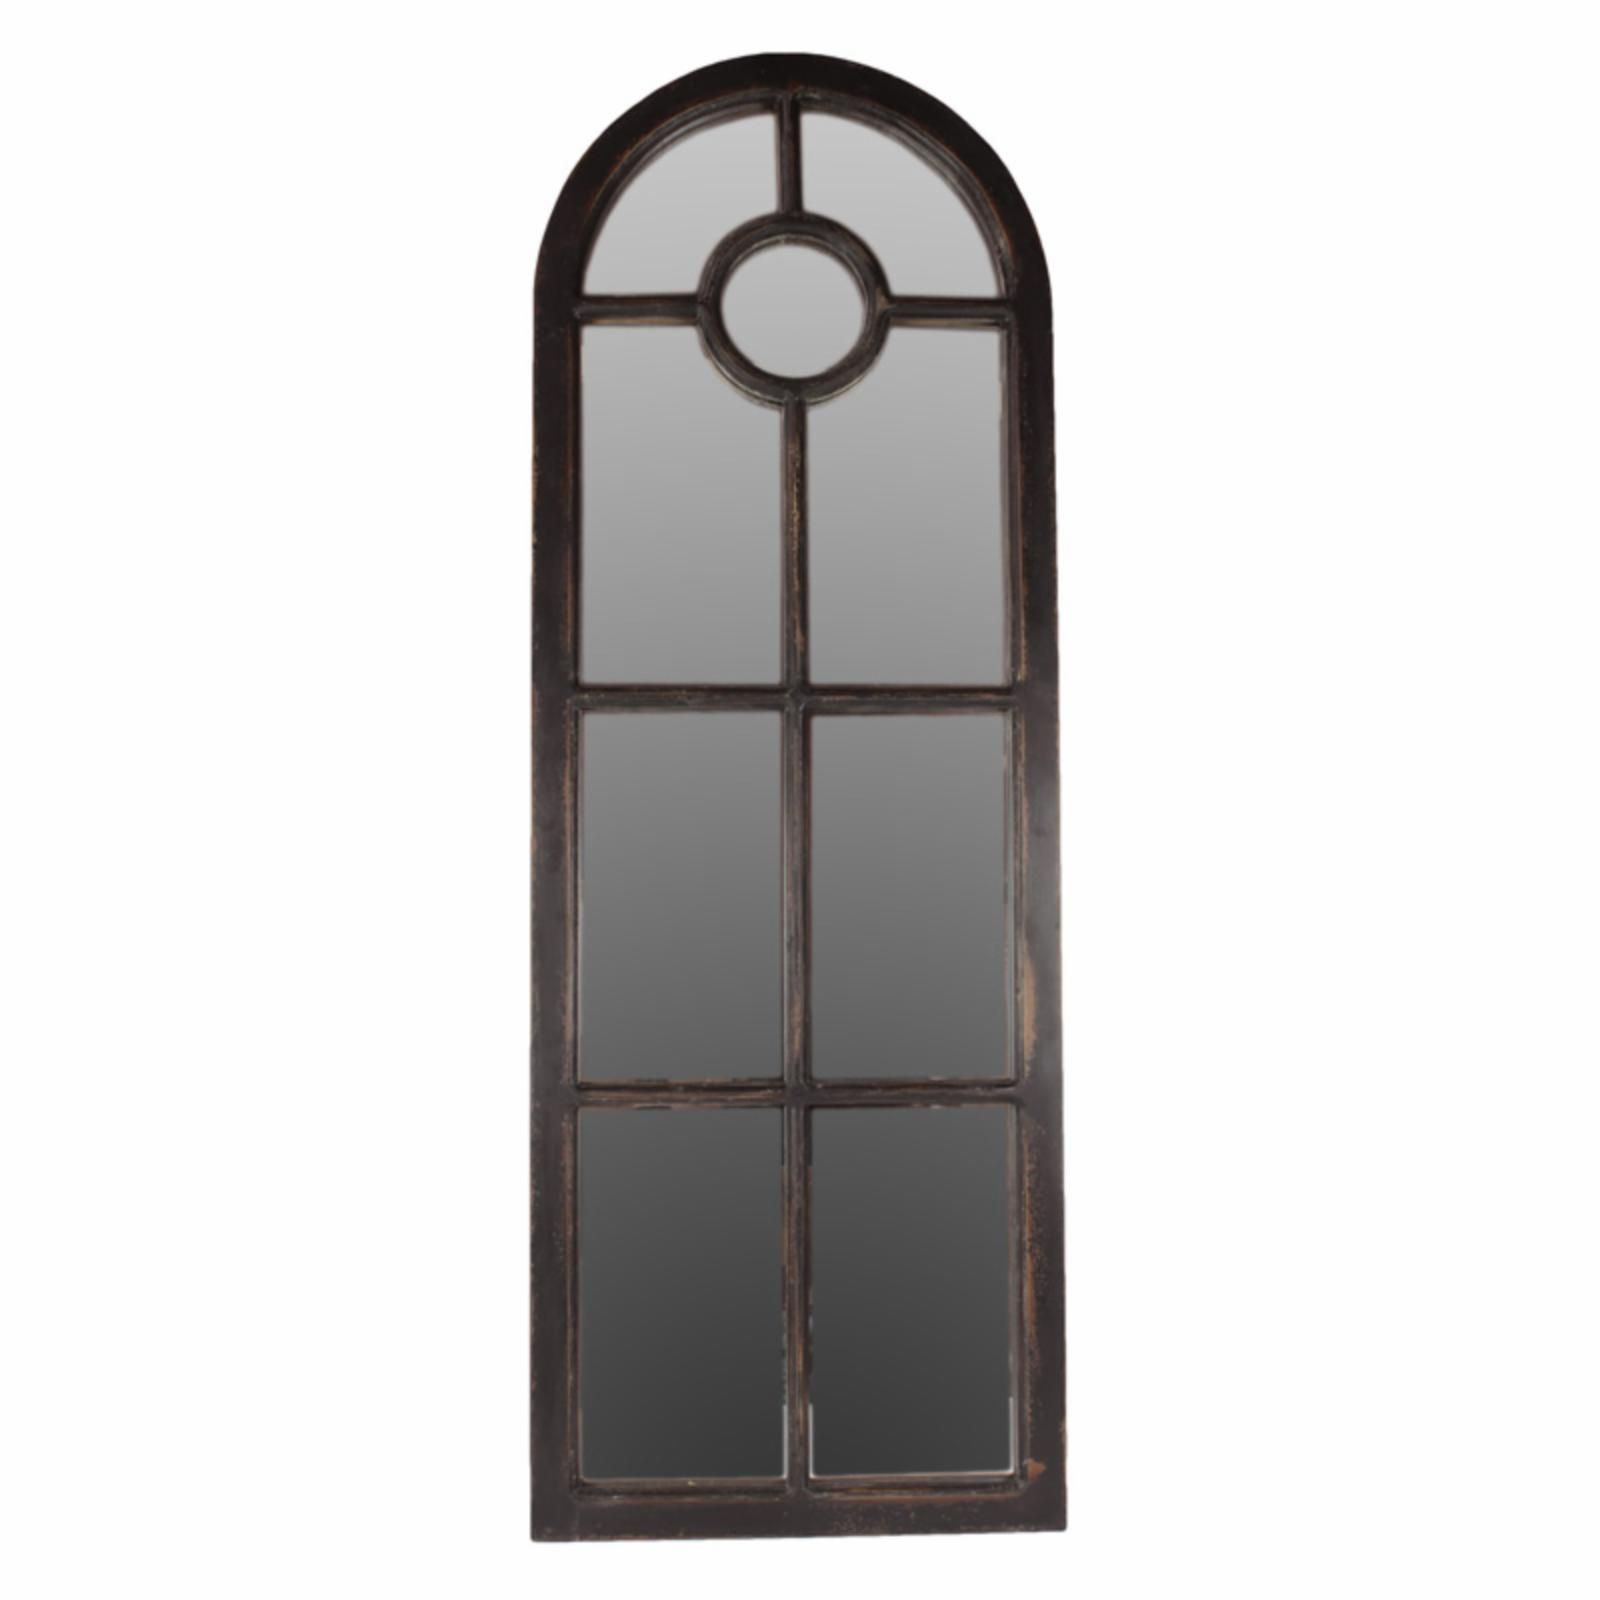 Urban Trends Wooden Arched Window Wall Mirror Black | Hayneedle